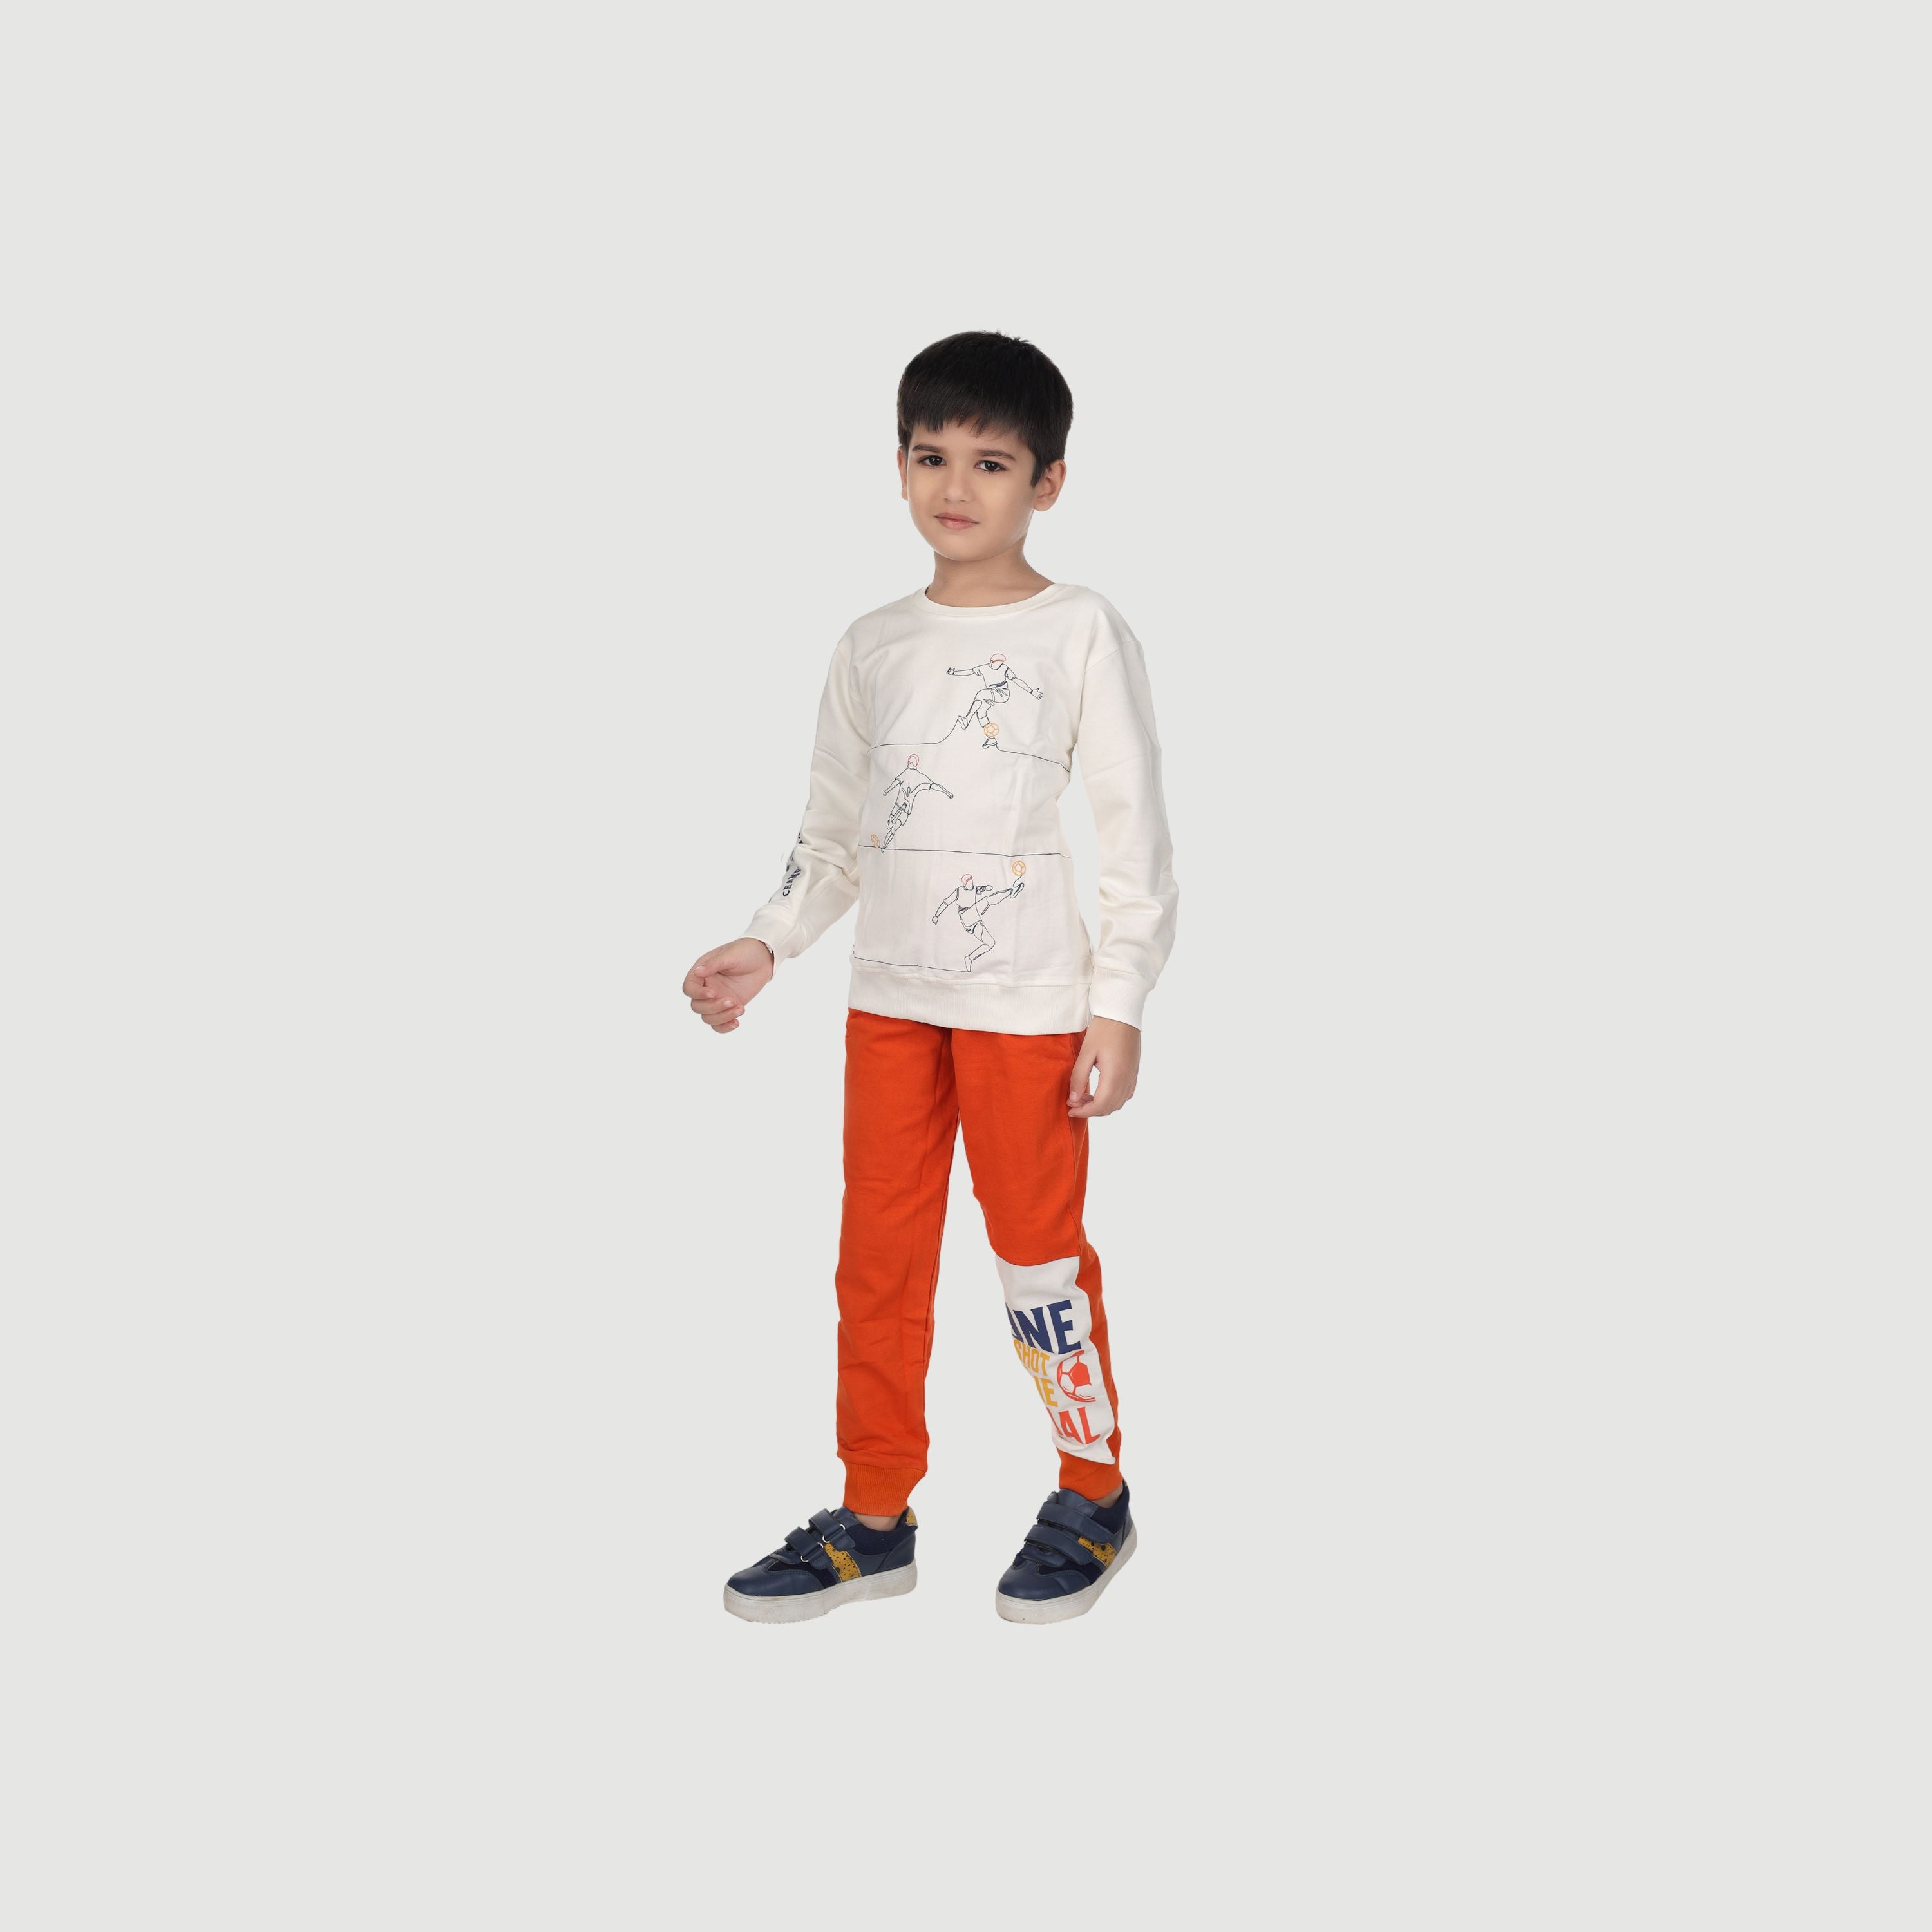 CLOTHING SET FOR BOY - WHITE